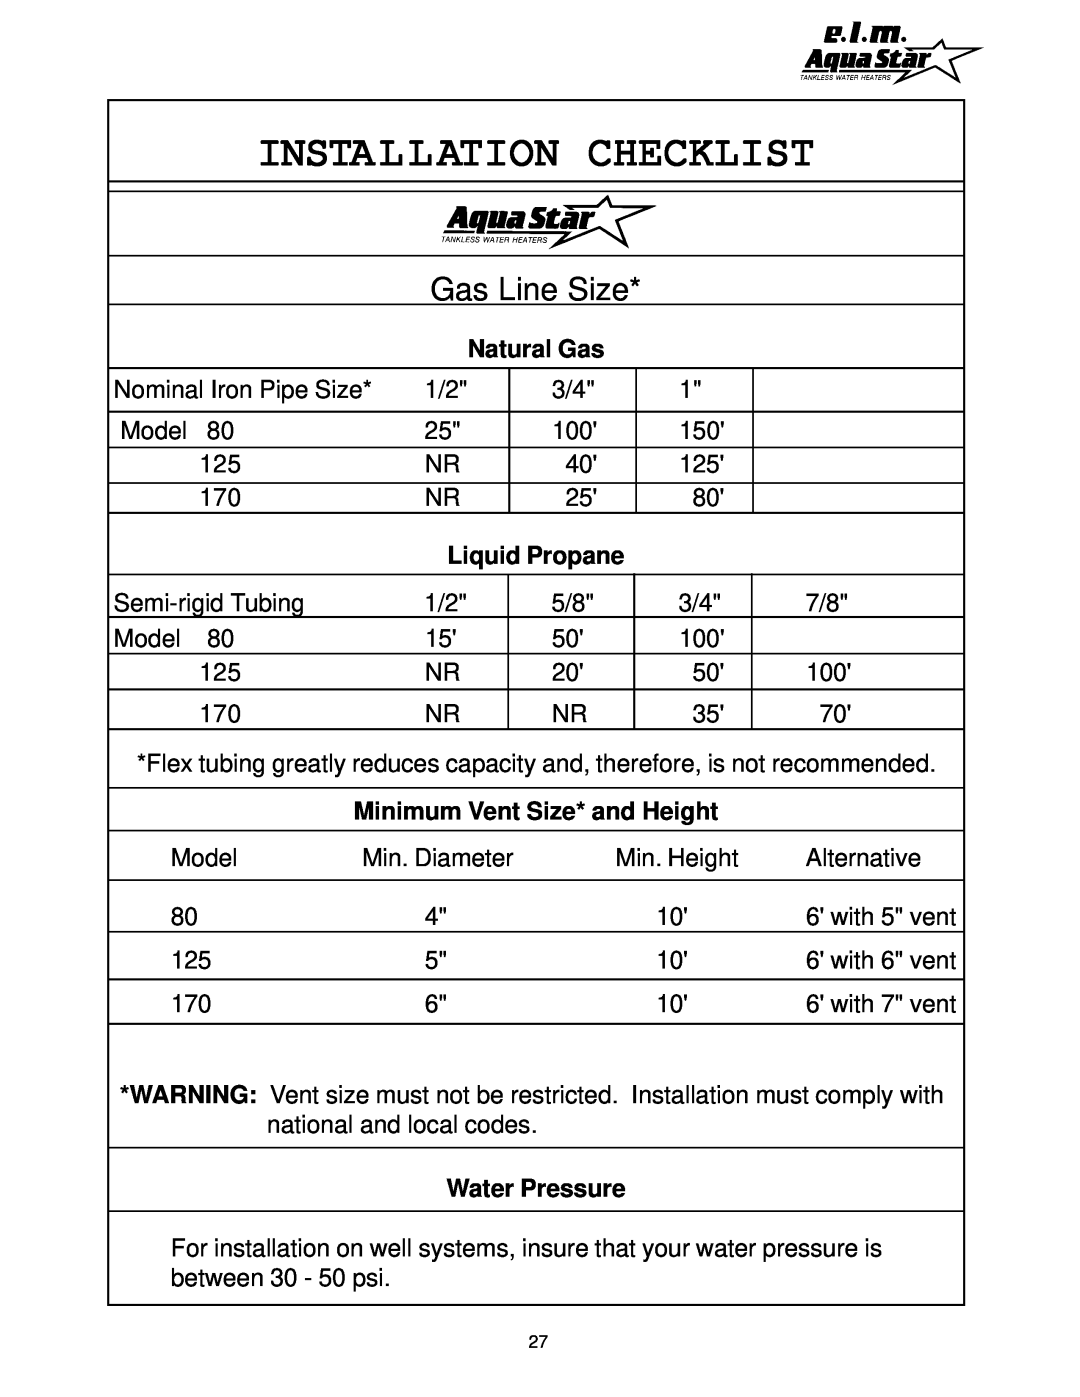 AquaStar 170 VP manual Natural Gas, Liquid Propane, Minimum Vent Size* and Height, Water Pressure, Installation Checklist 